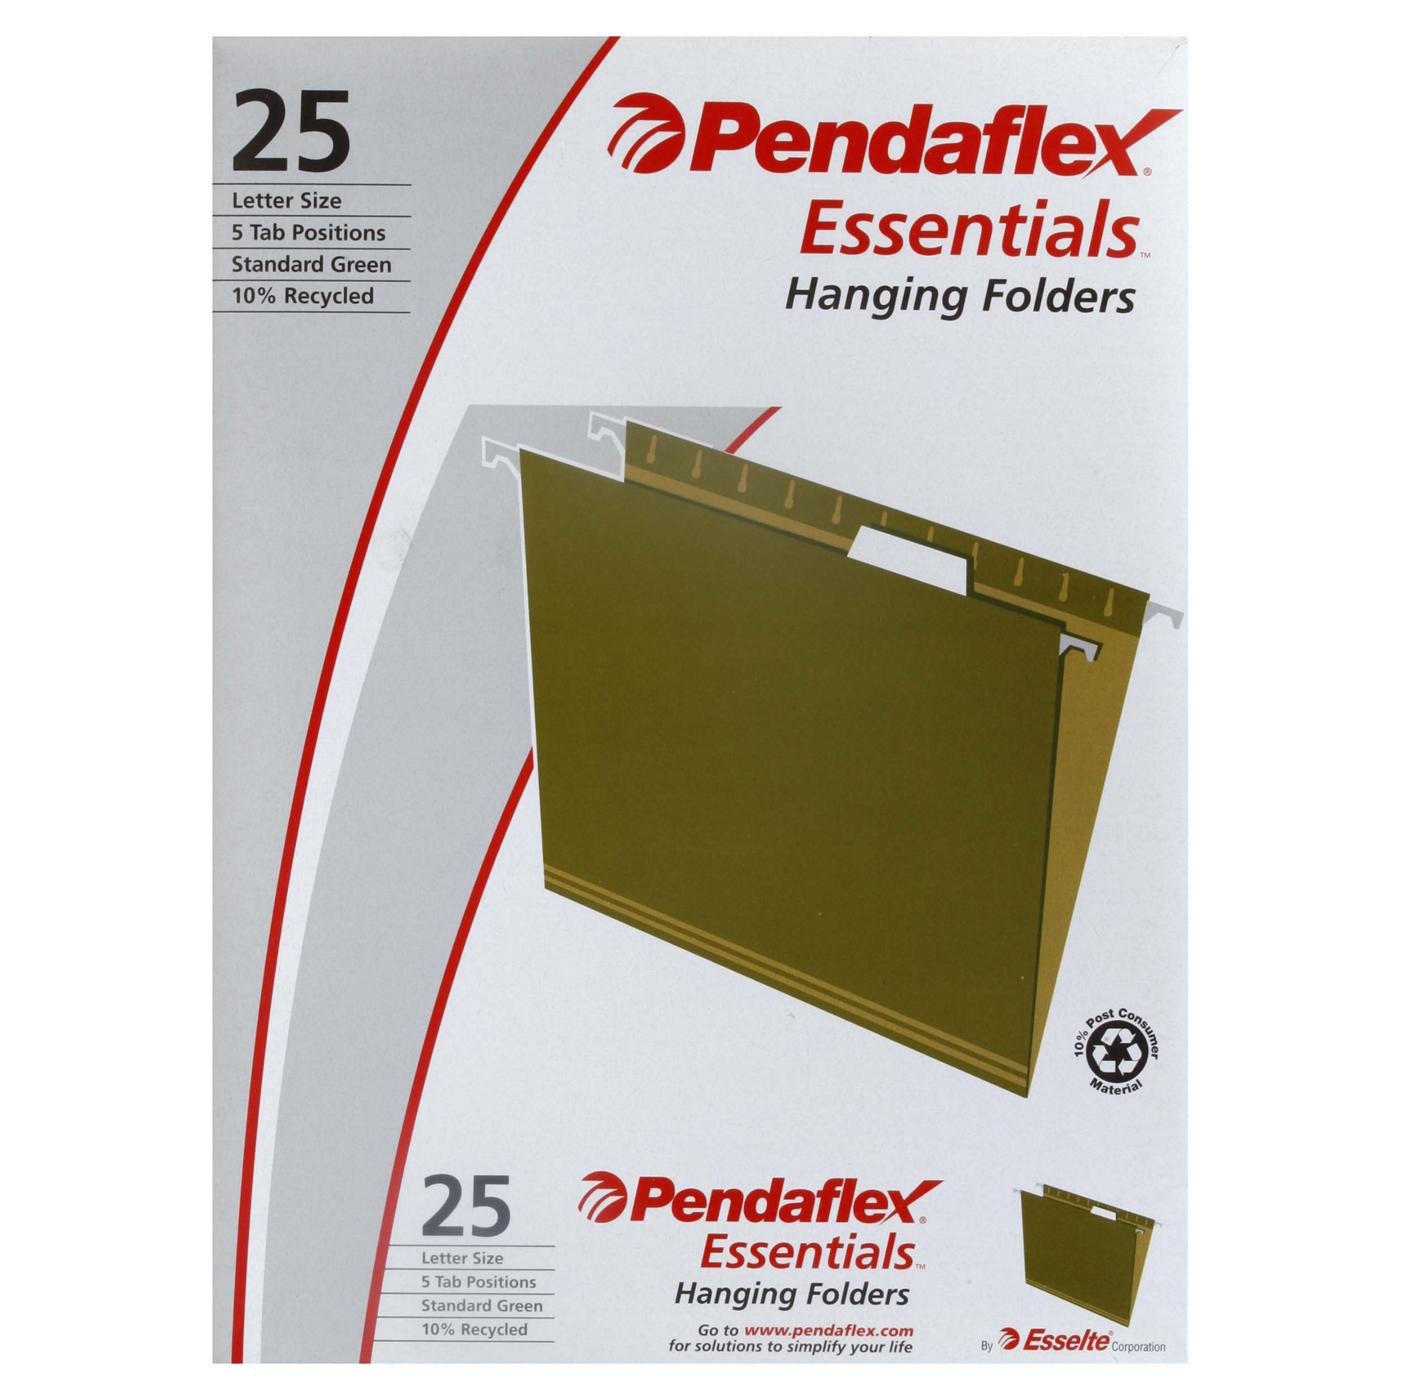 Esselte Pendaflex Essentials Hanging Folders - Green; image 1 of 2